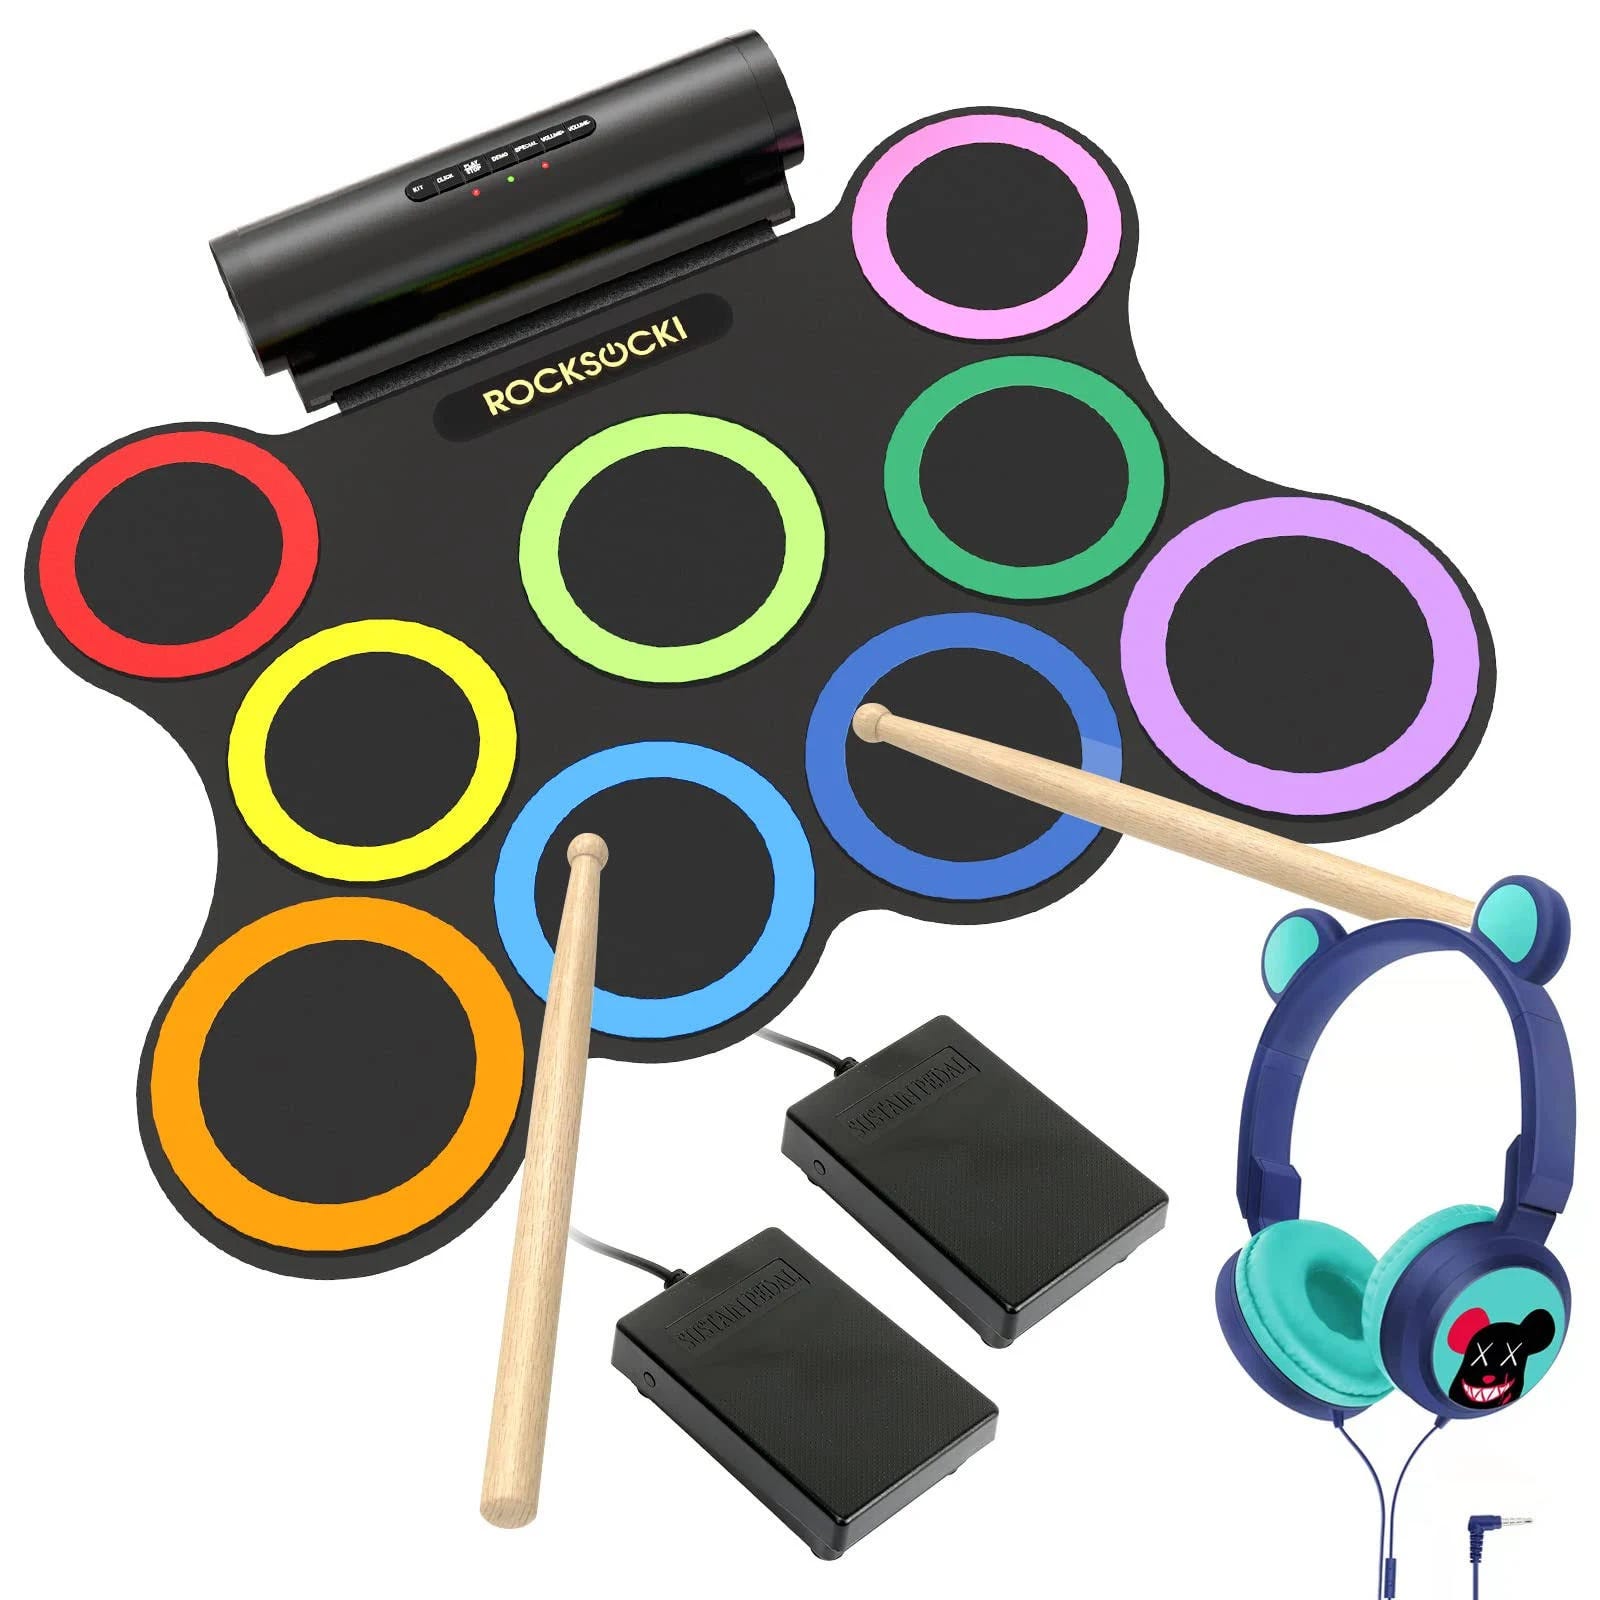 Rocksoki Portable Electric Drum Set with USB MIDI Connection | Image